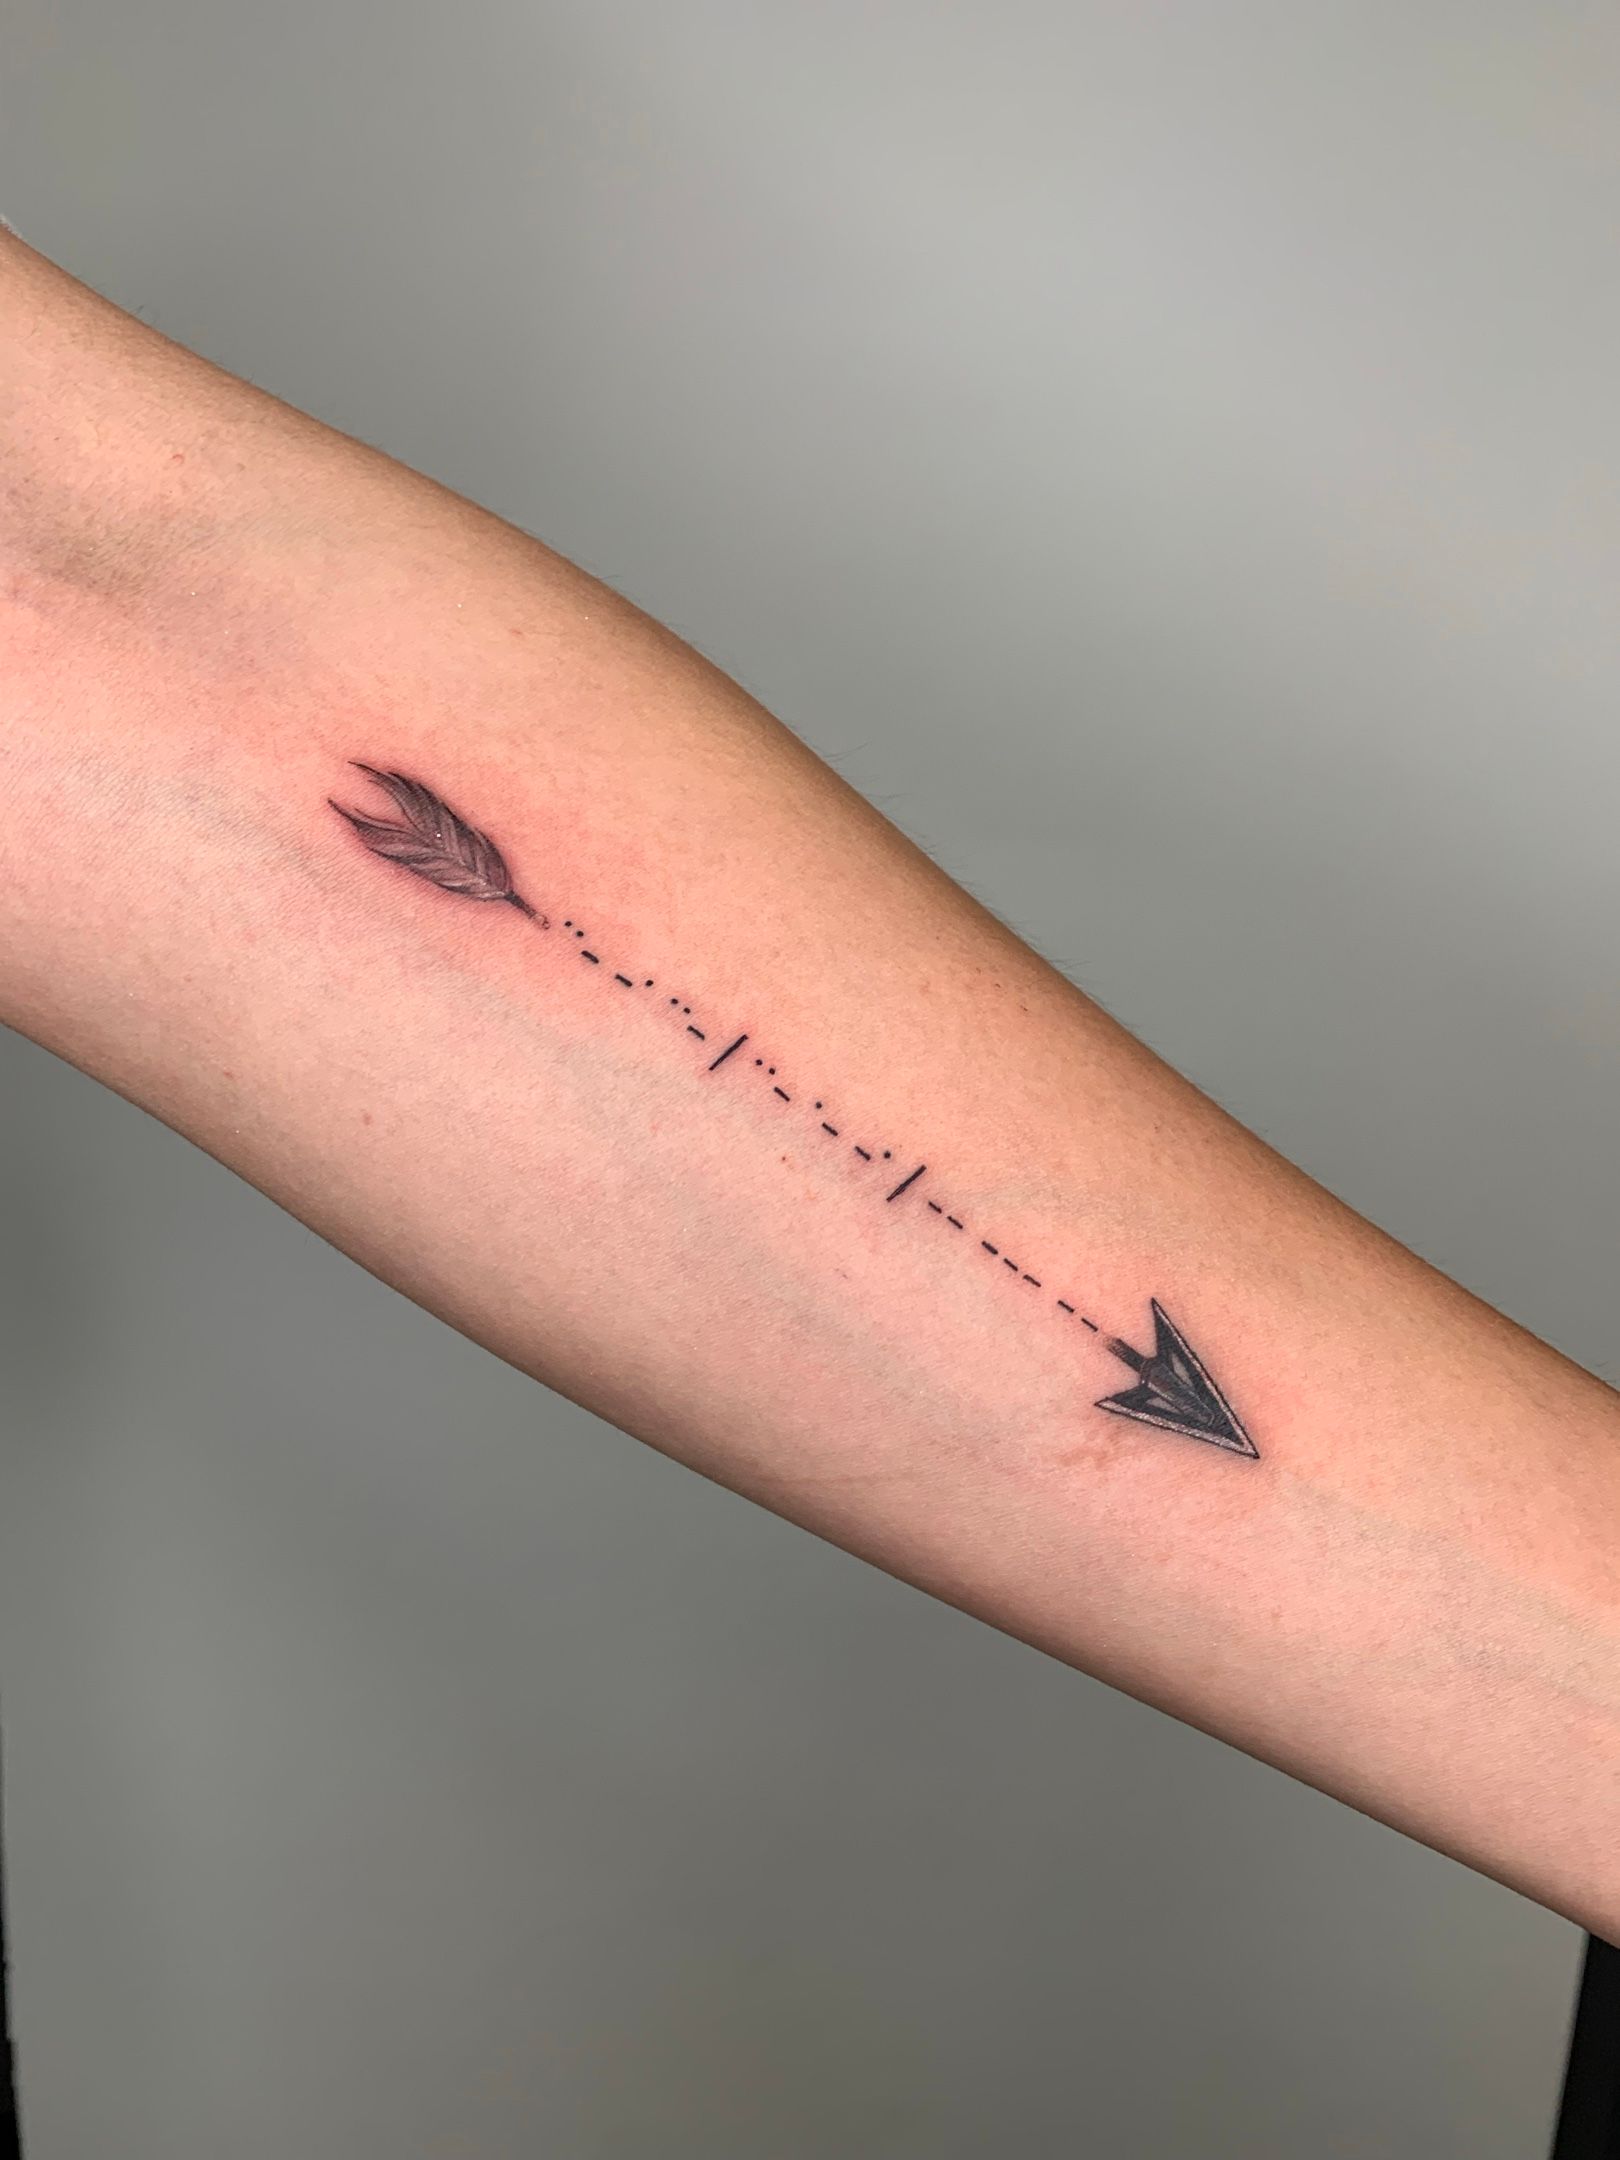 BFF in Morse code tattoo  Couple wrist tattoos Morse code tattoo Friend  tattoos